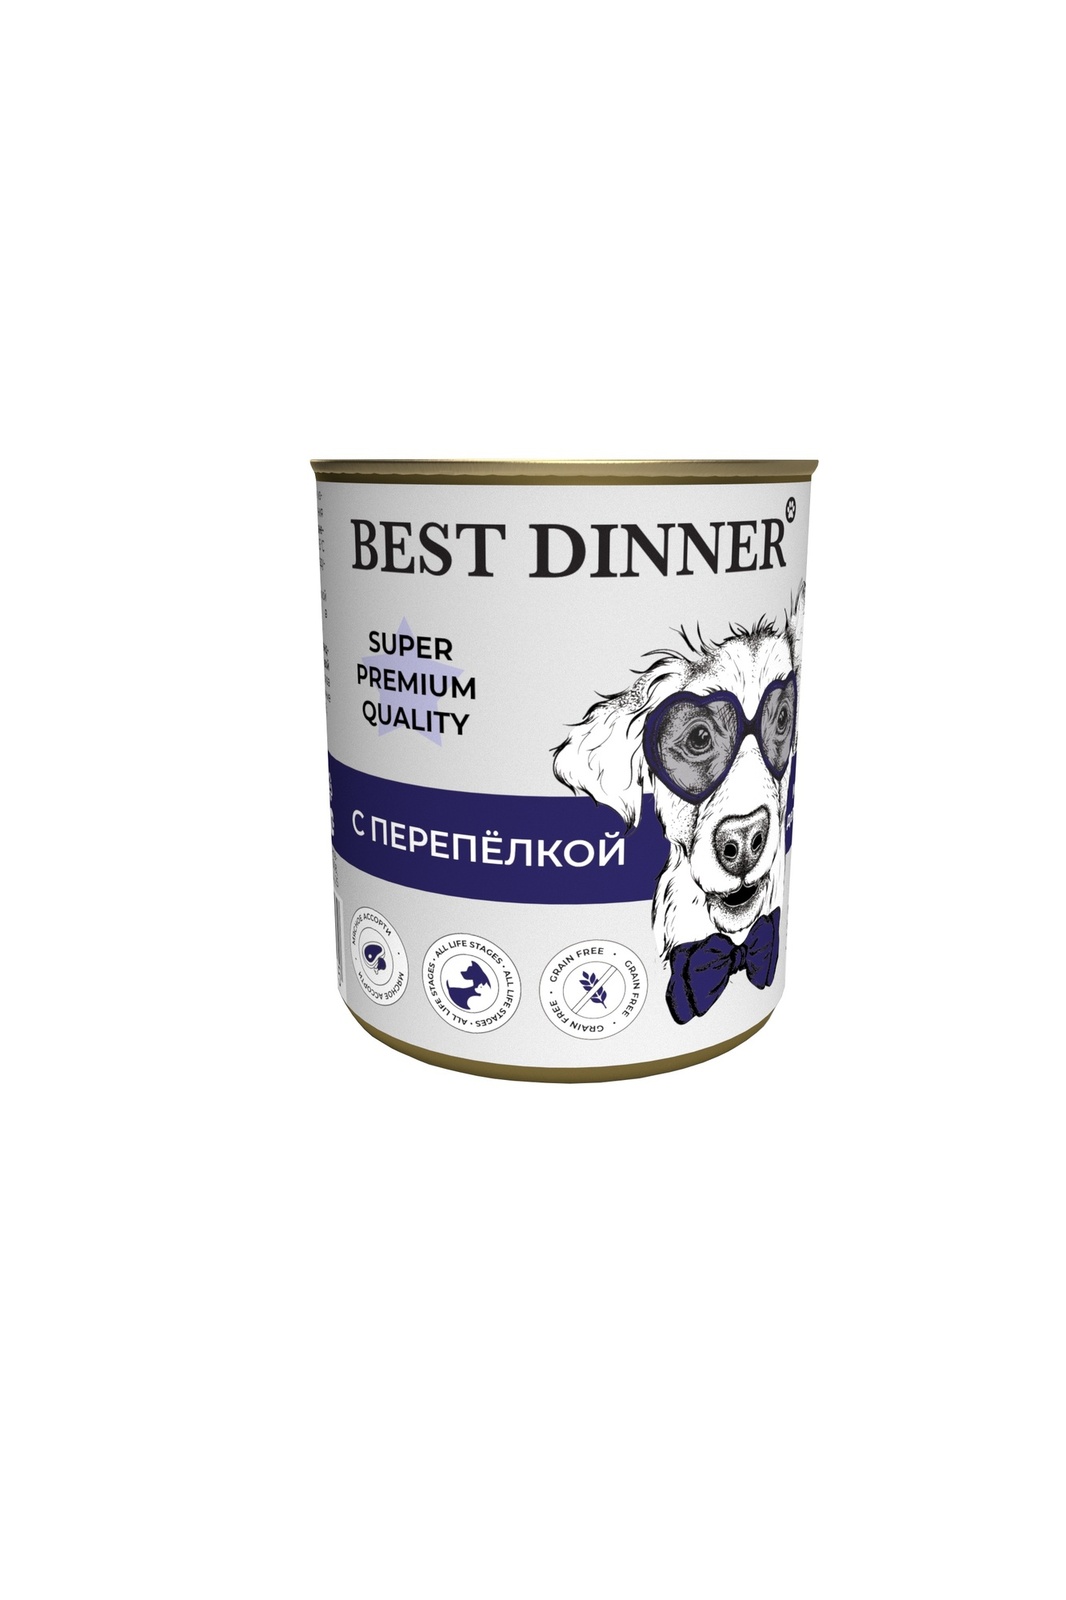 Best Dinner Best Dinner консервы для собак Super Premium С перепелкой (340 г) best dinner best dinner консервы premium меню 5 с ягненком и рисом 340 г